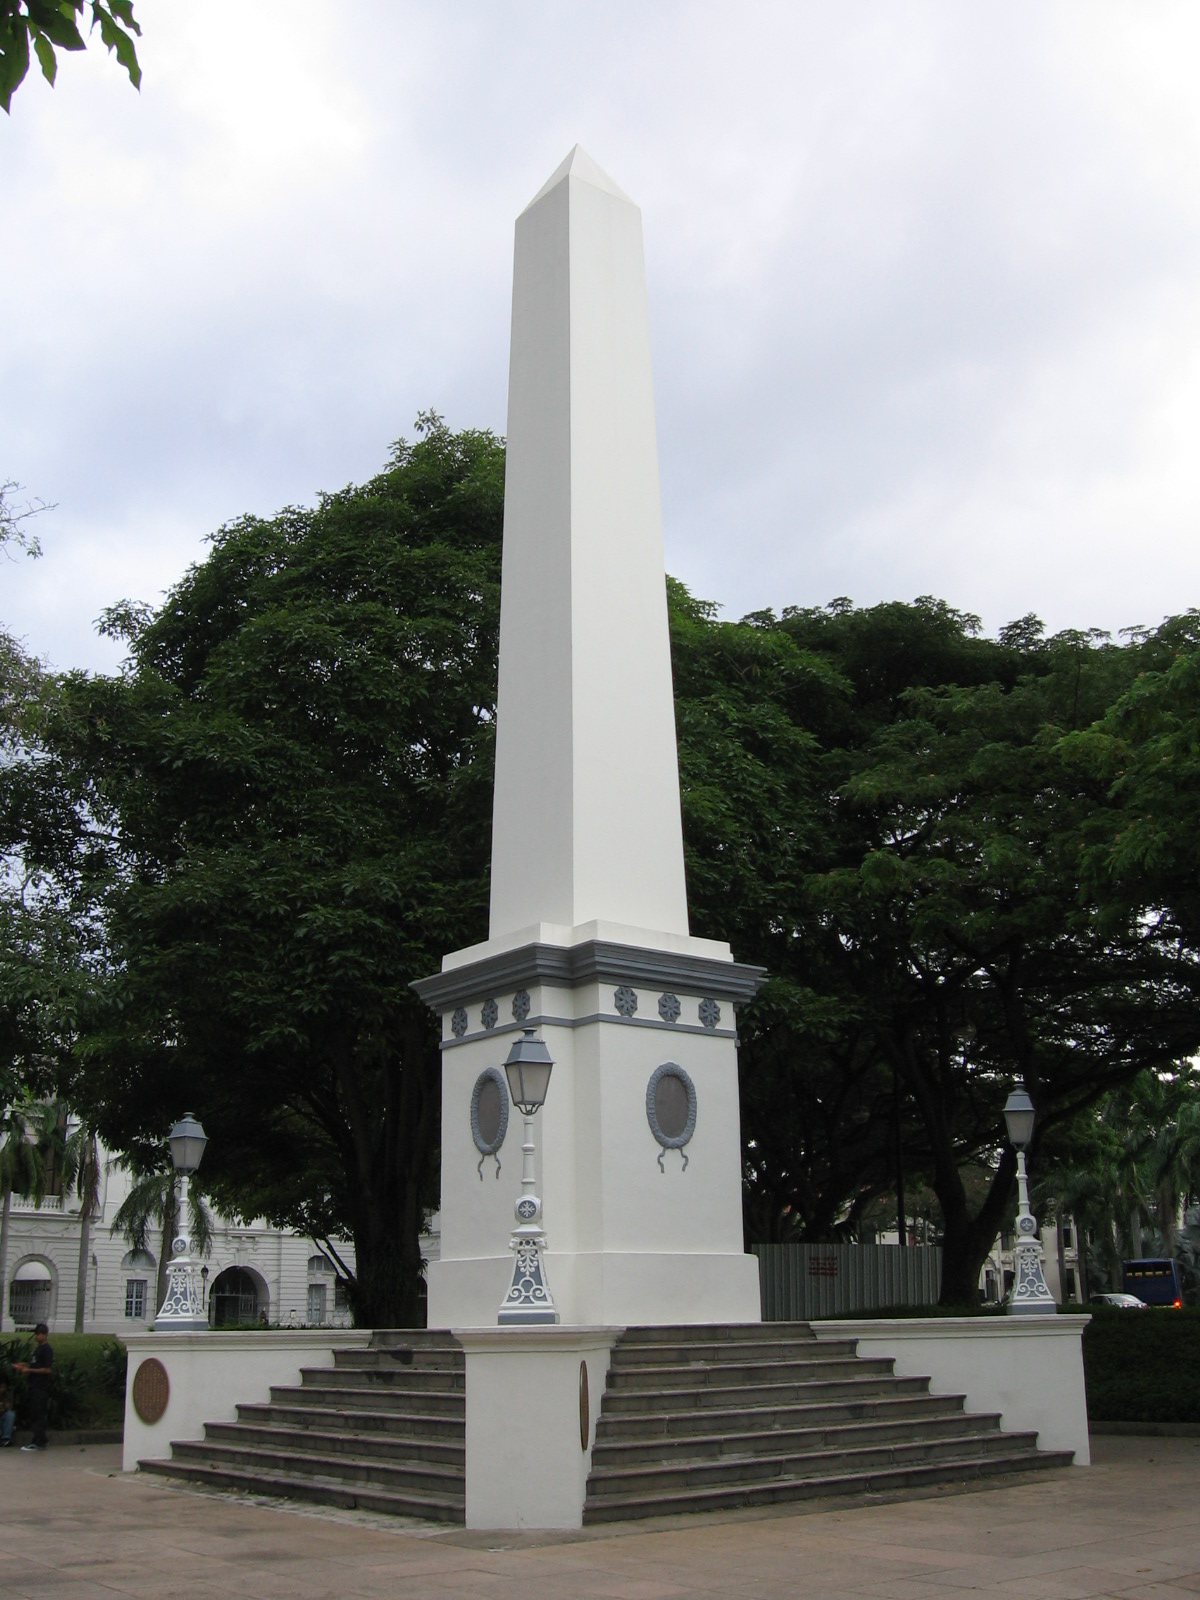 File:Dalhousie Obelisk 2, Jan 06.JPG - Wikimedia Commons